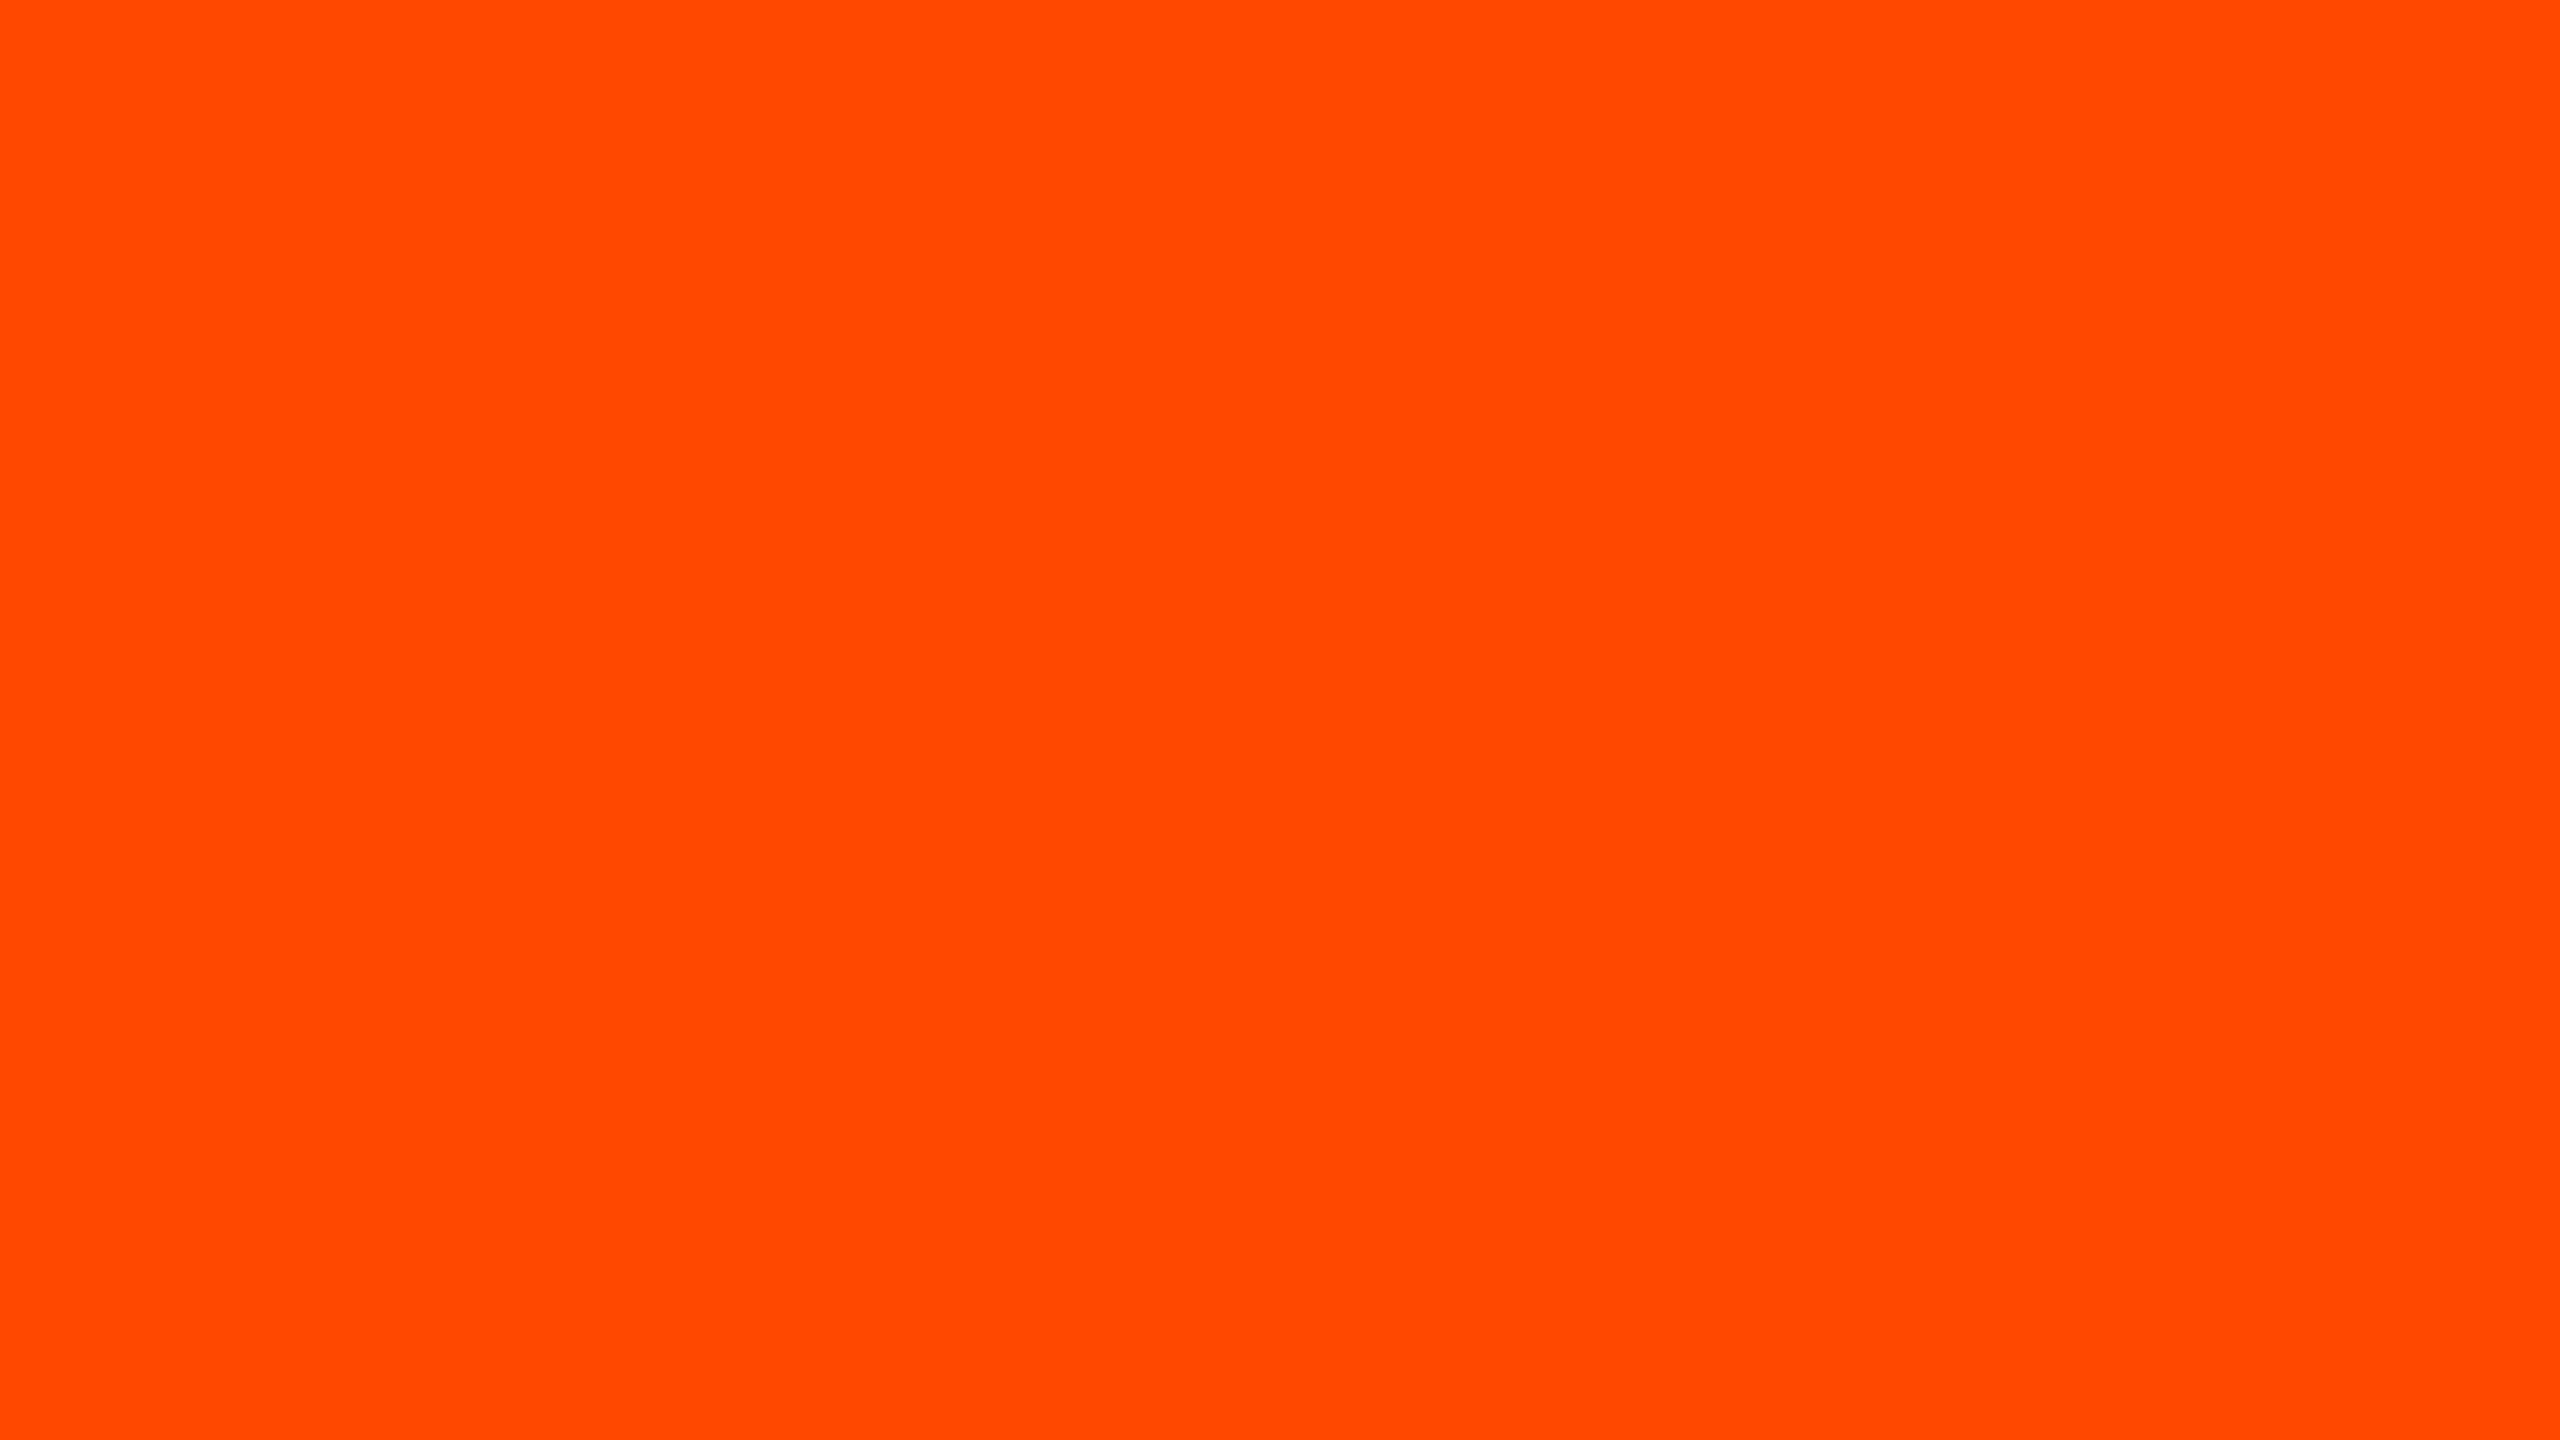 Orange desktop backgrounds